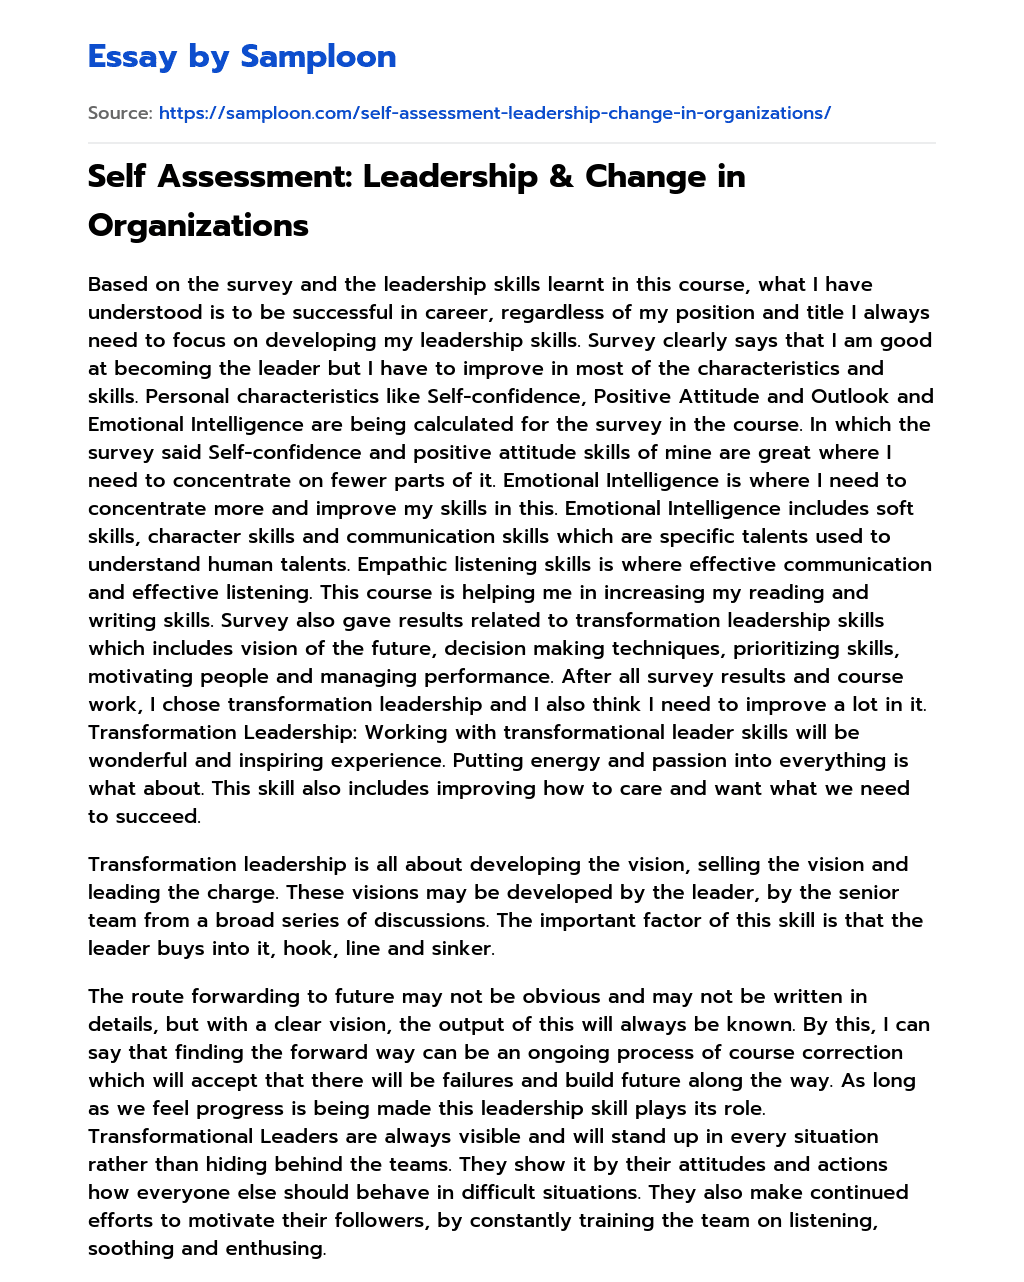 Self Assessment: Leadership & Change in Organizations essay